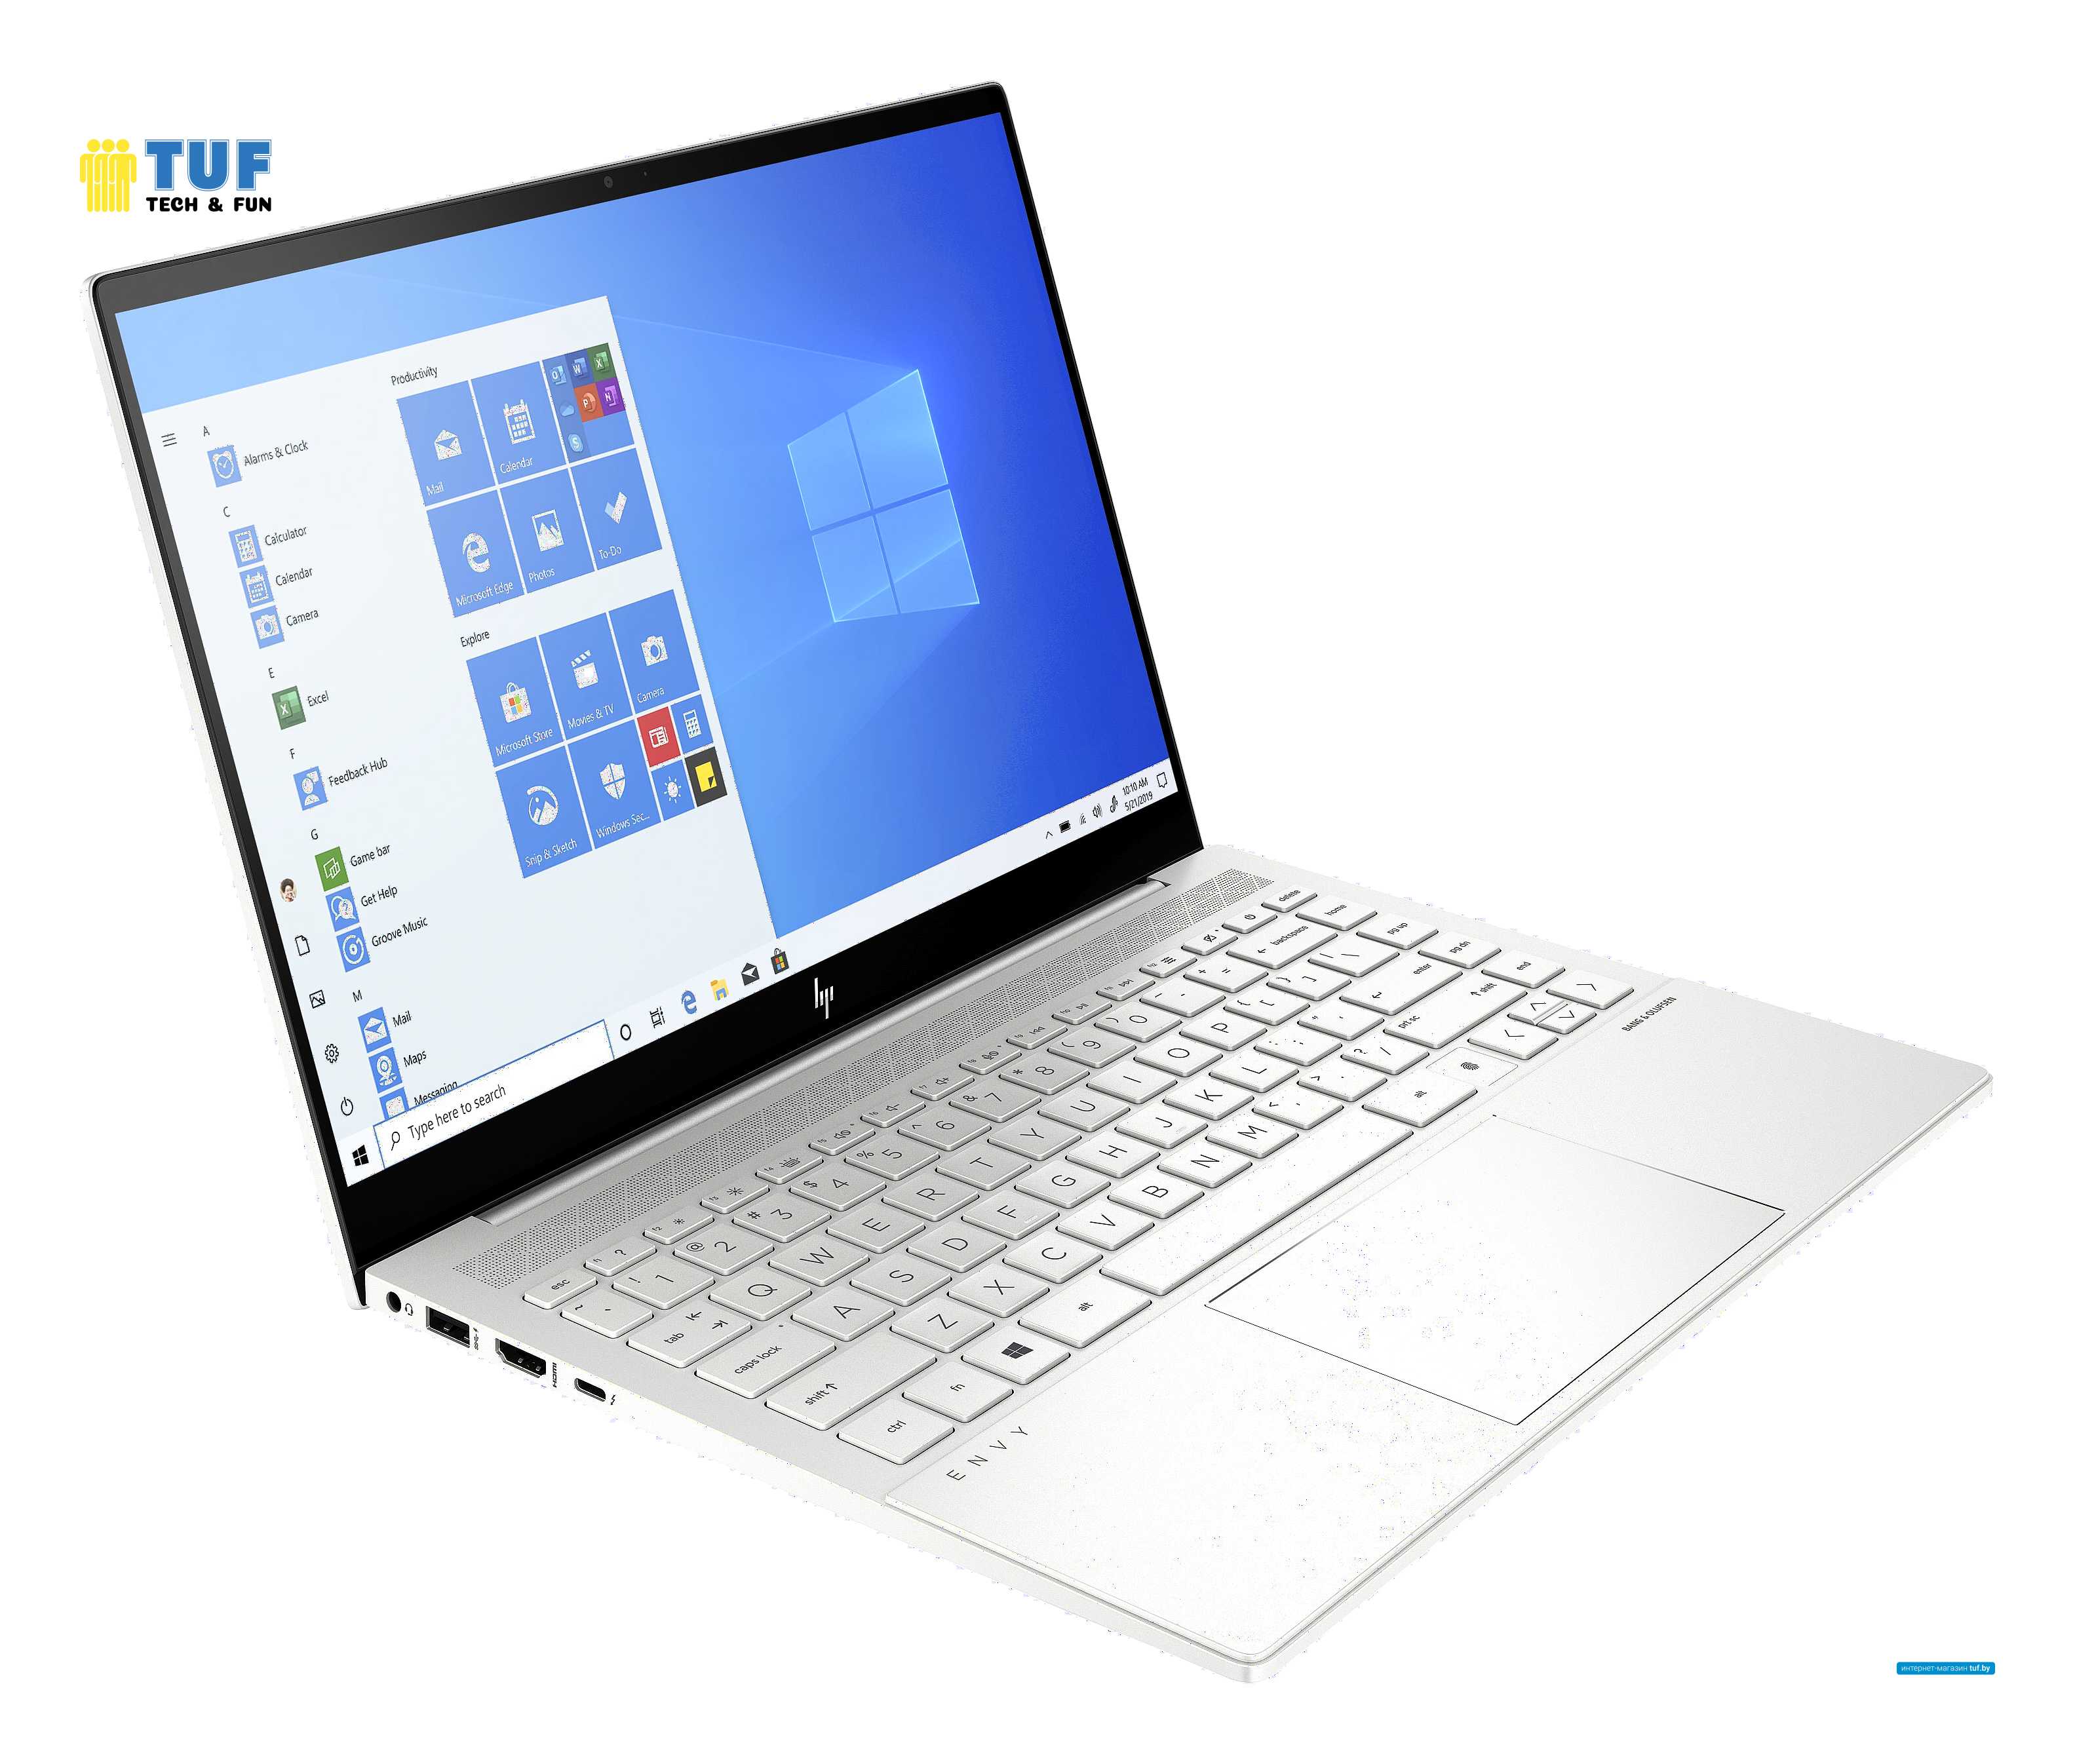 Ноутбук HP ENVY 14-eb0007ur 3B3L2EA